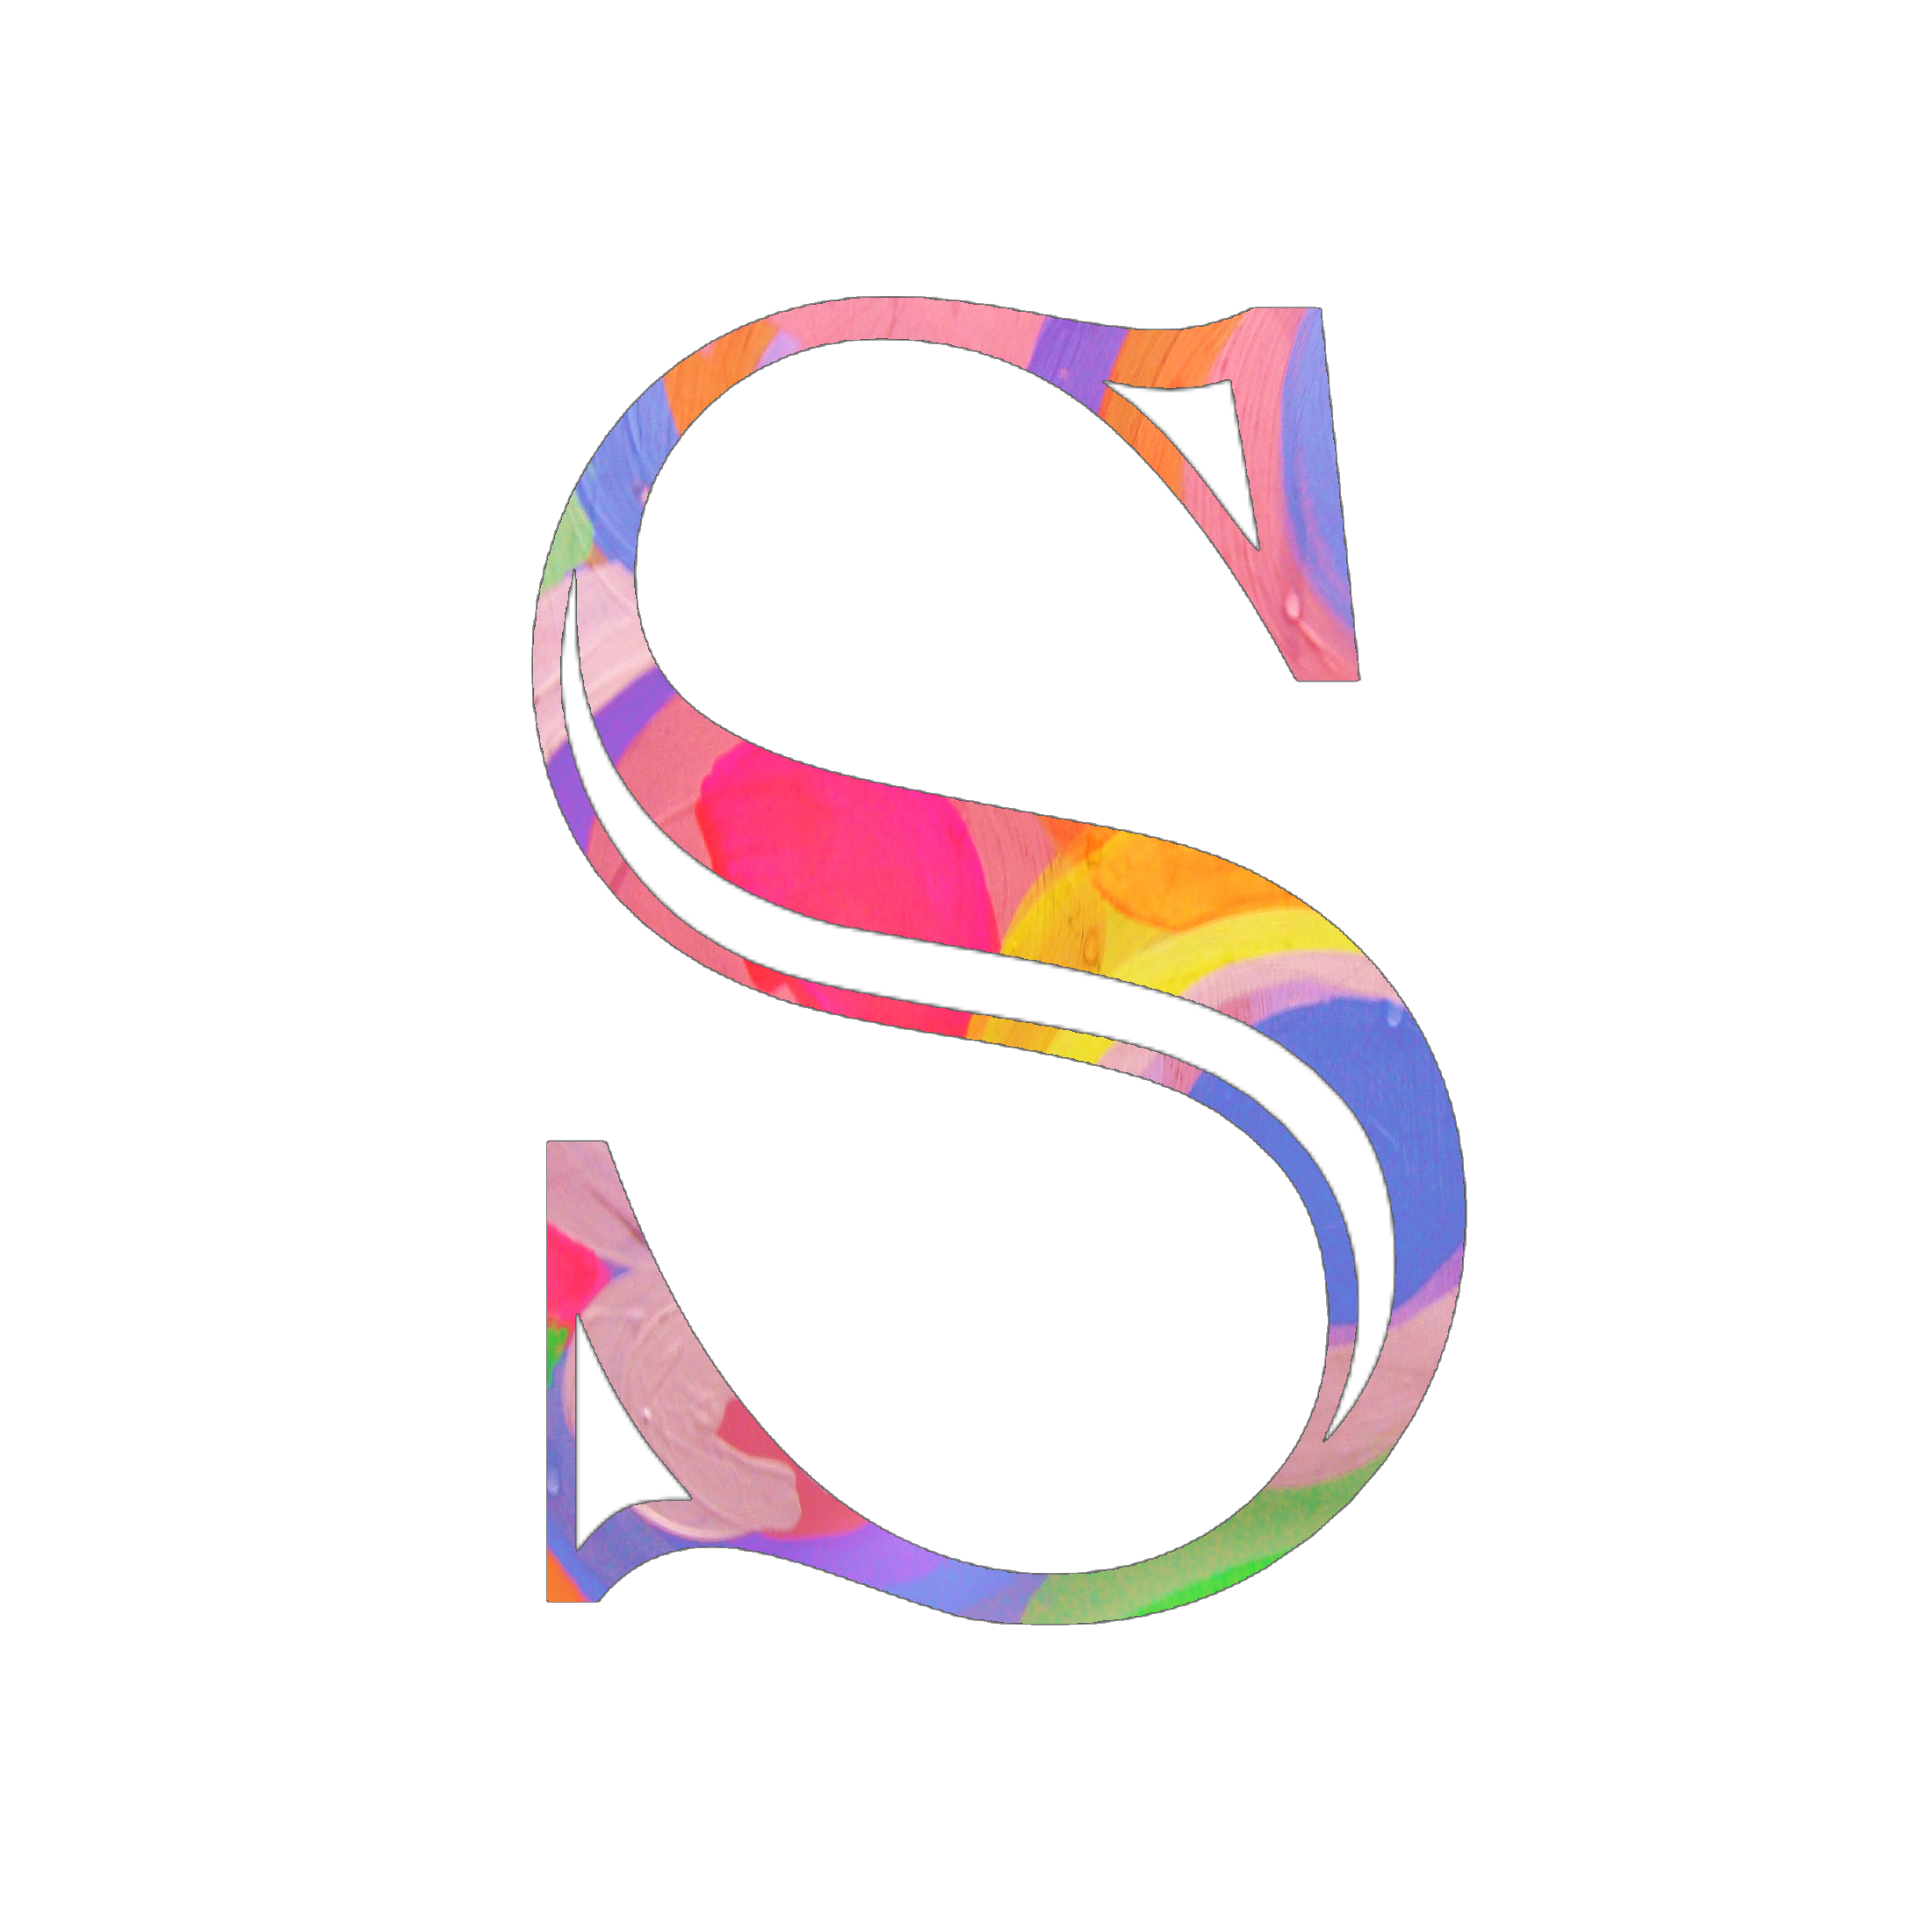 S. Необычная буква s. Красивая буква s. Эмблема с буквой s. Красивая буква s для логотипа.